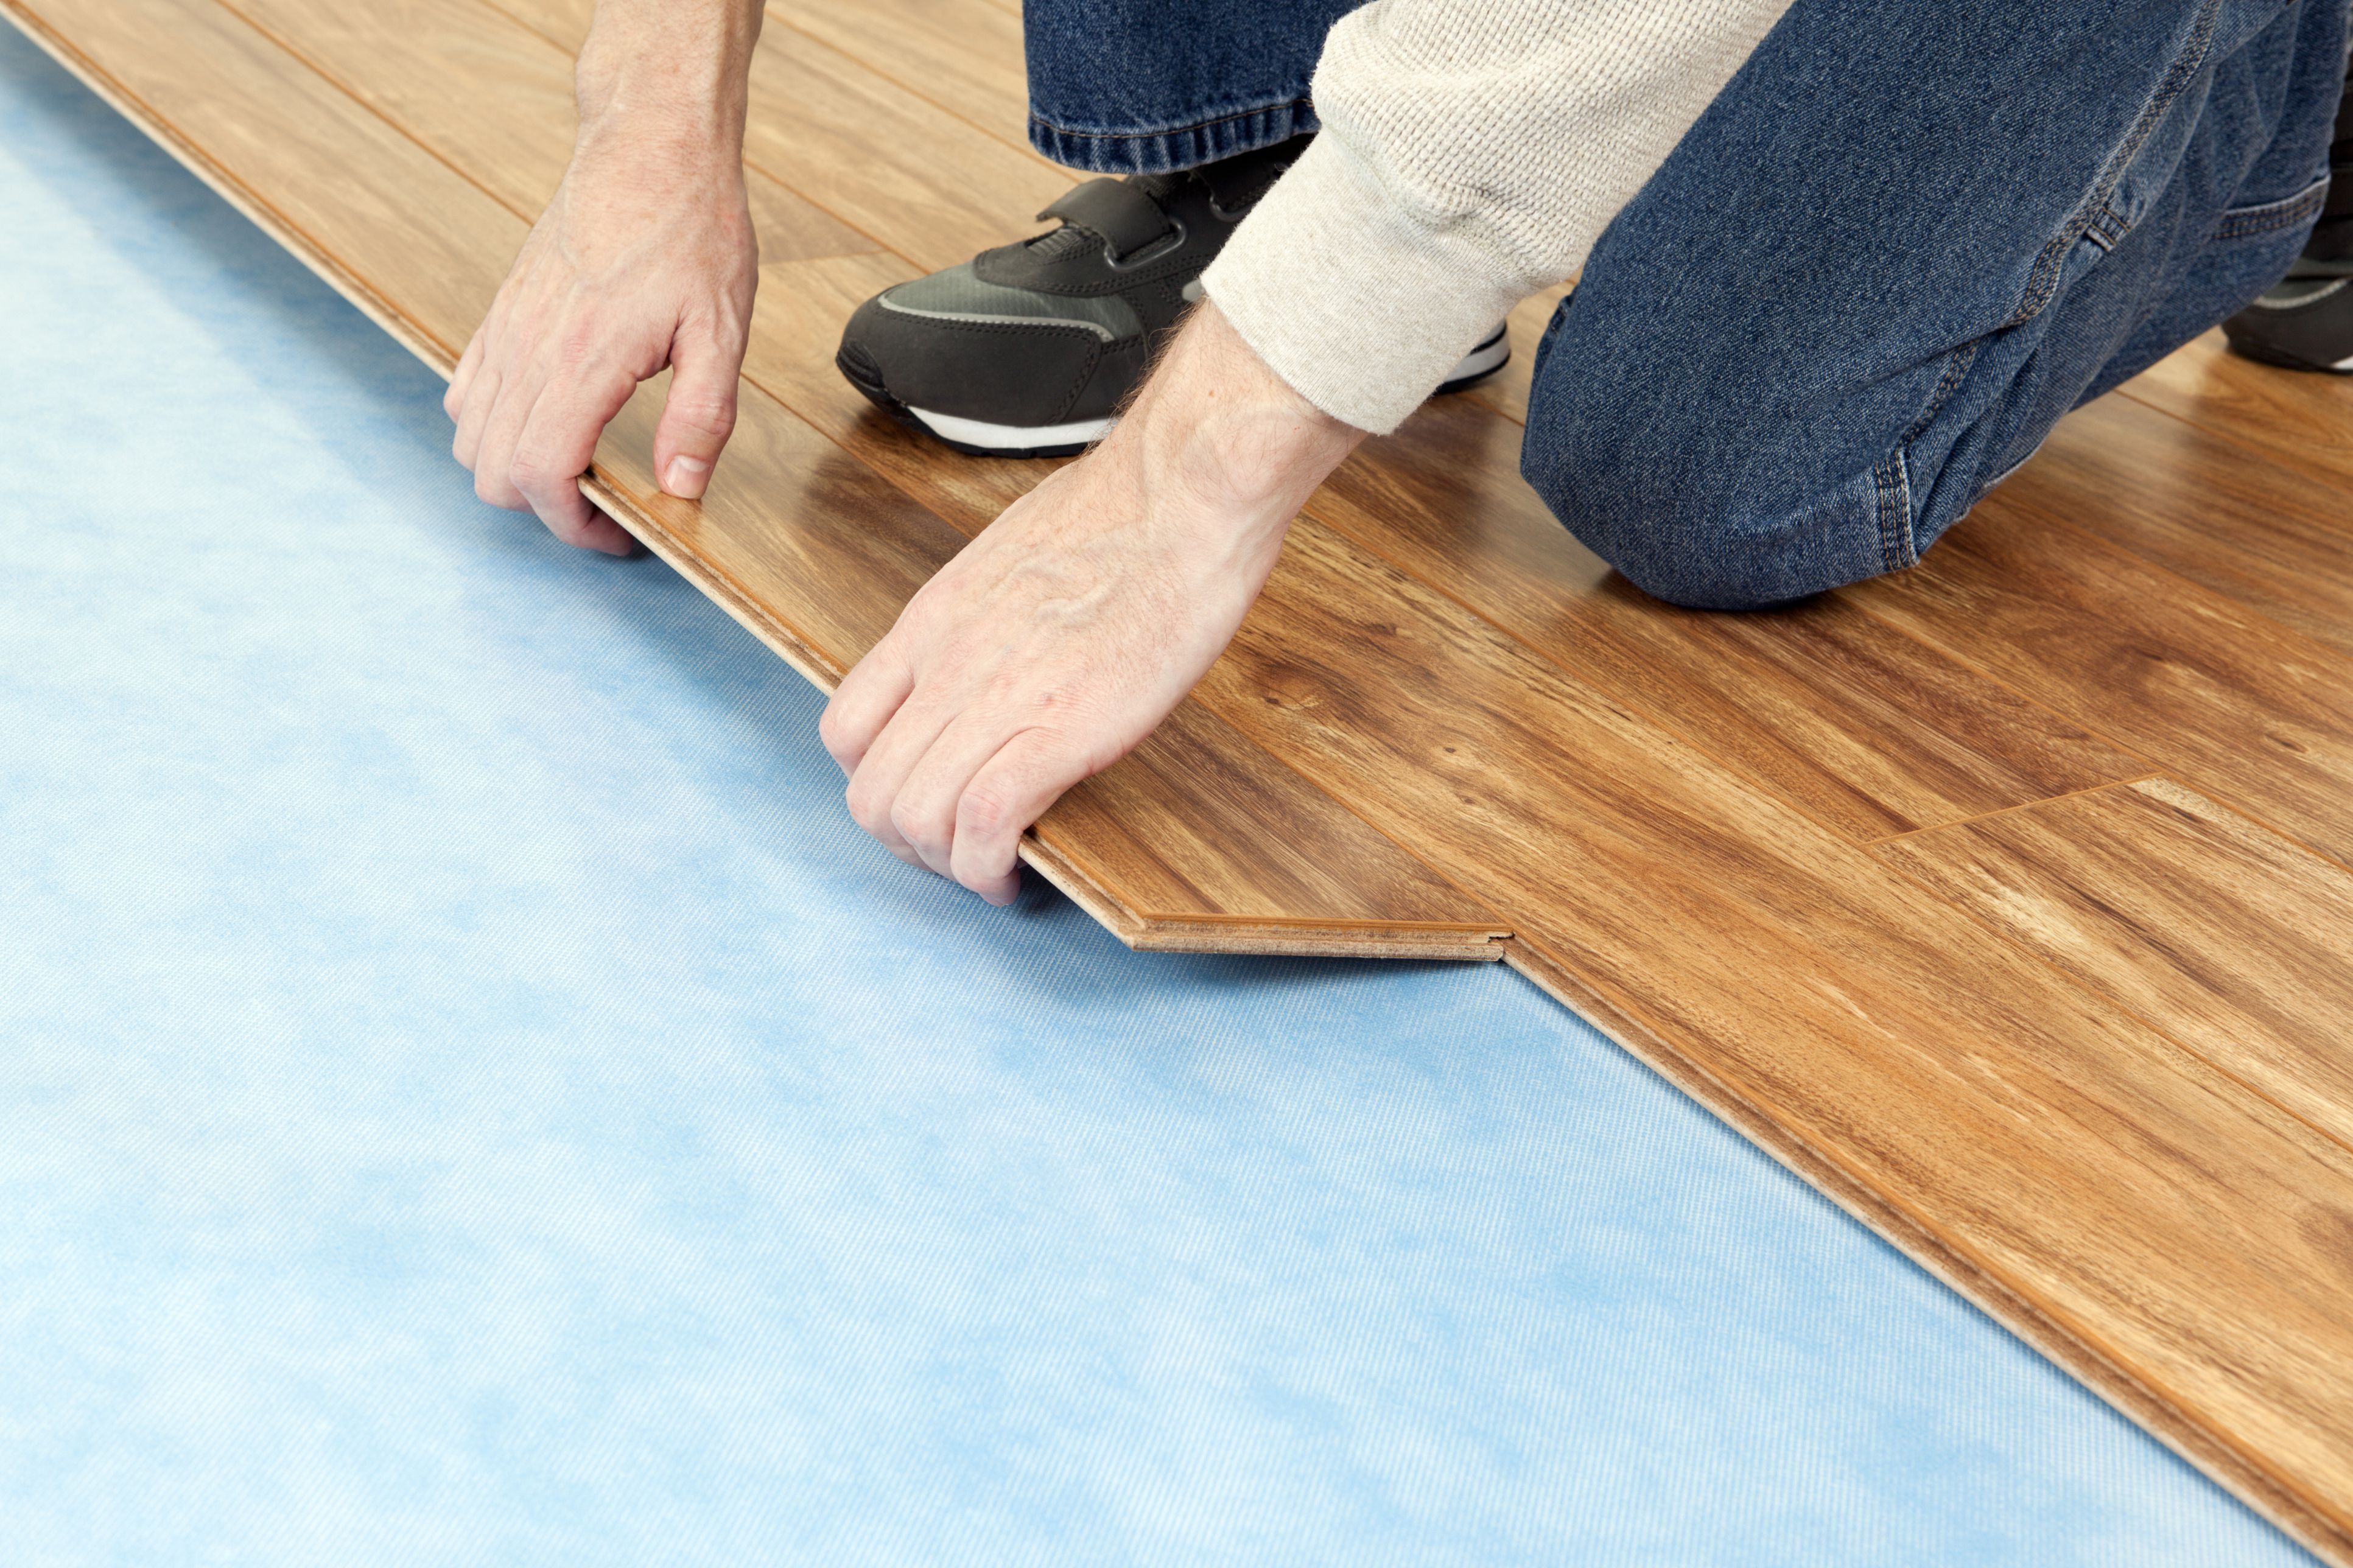 A Hardwood Floor Specialist Of Flooring Underlayment the Basics Throughout New Floor Installation 185270632 582b722c3df78c6f6af0a8ab